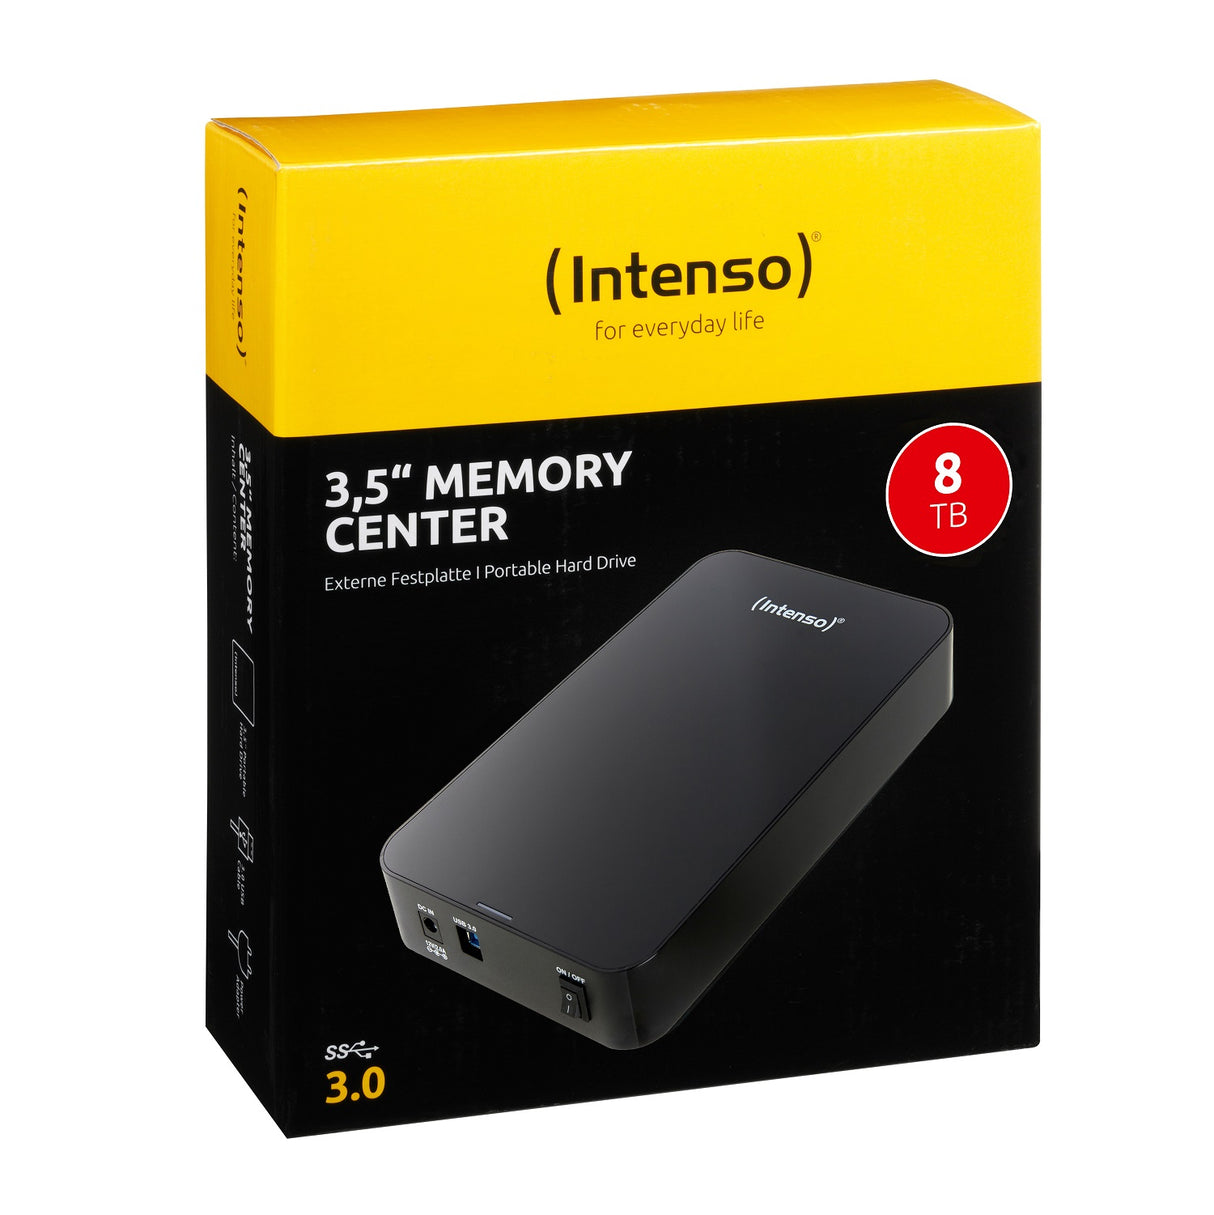 Intenso zunanji disk 8TB 3,5" Memory Center USB 3.0